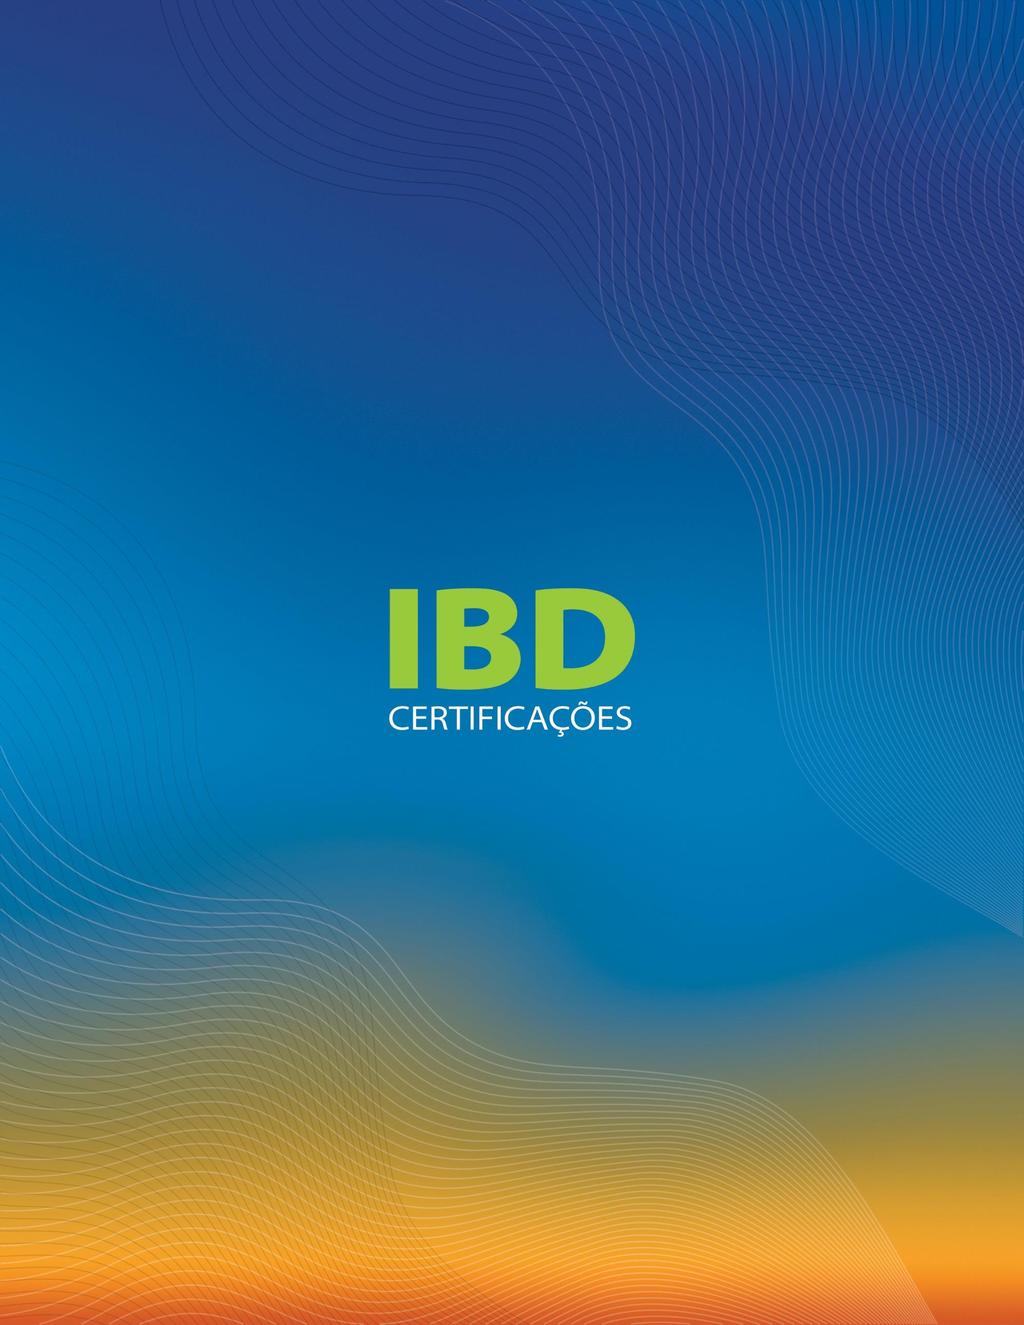 IBD CERTIFICAÇÕES Ltda. Tel.: +55 14 3811 9800 www.ibd.com.